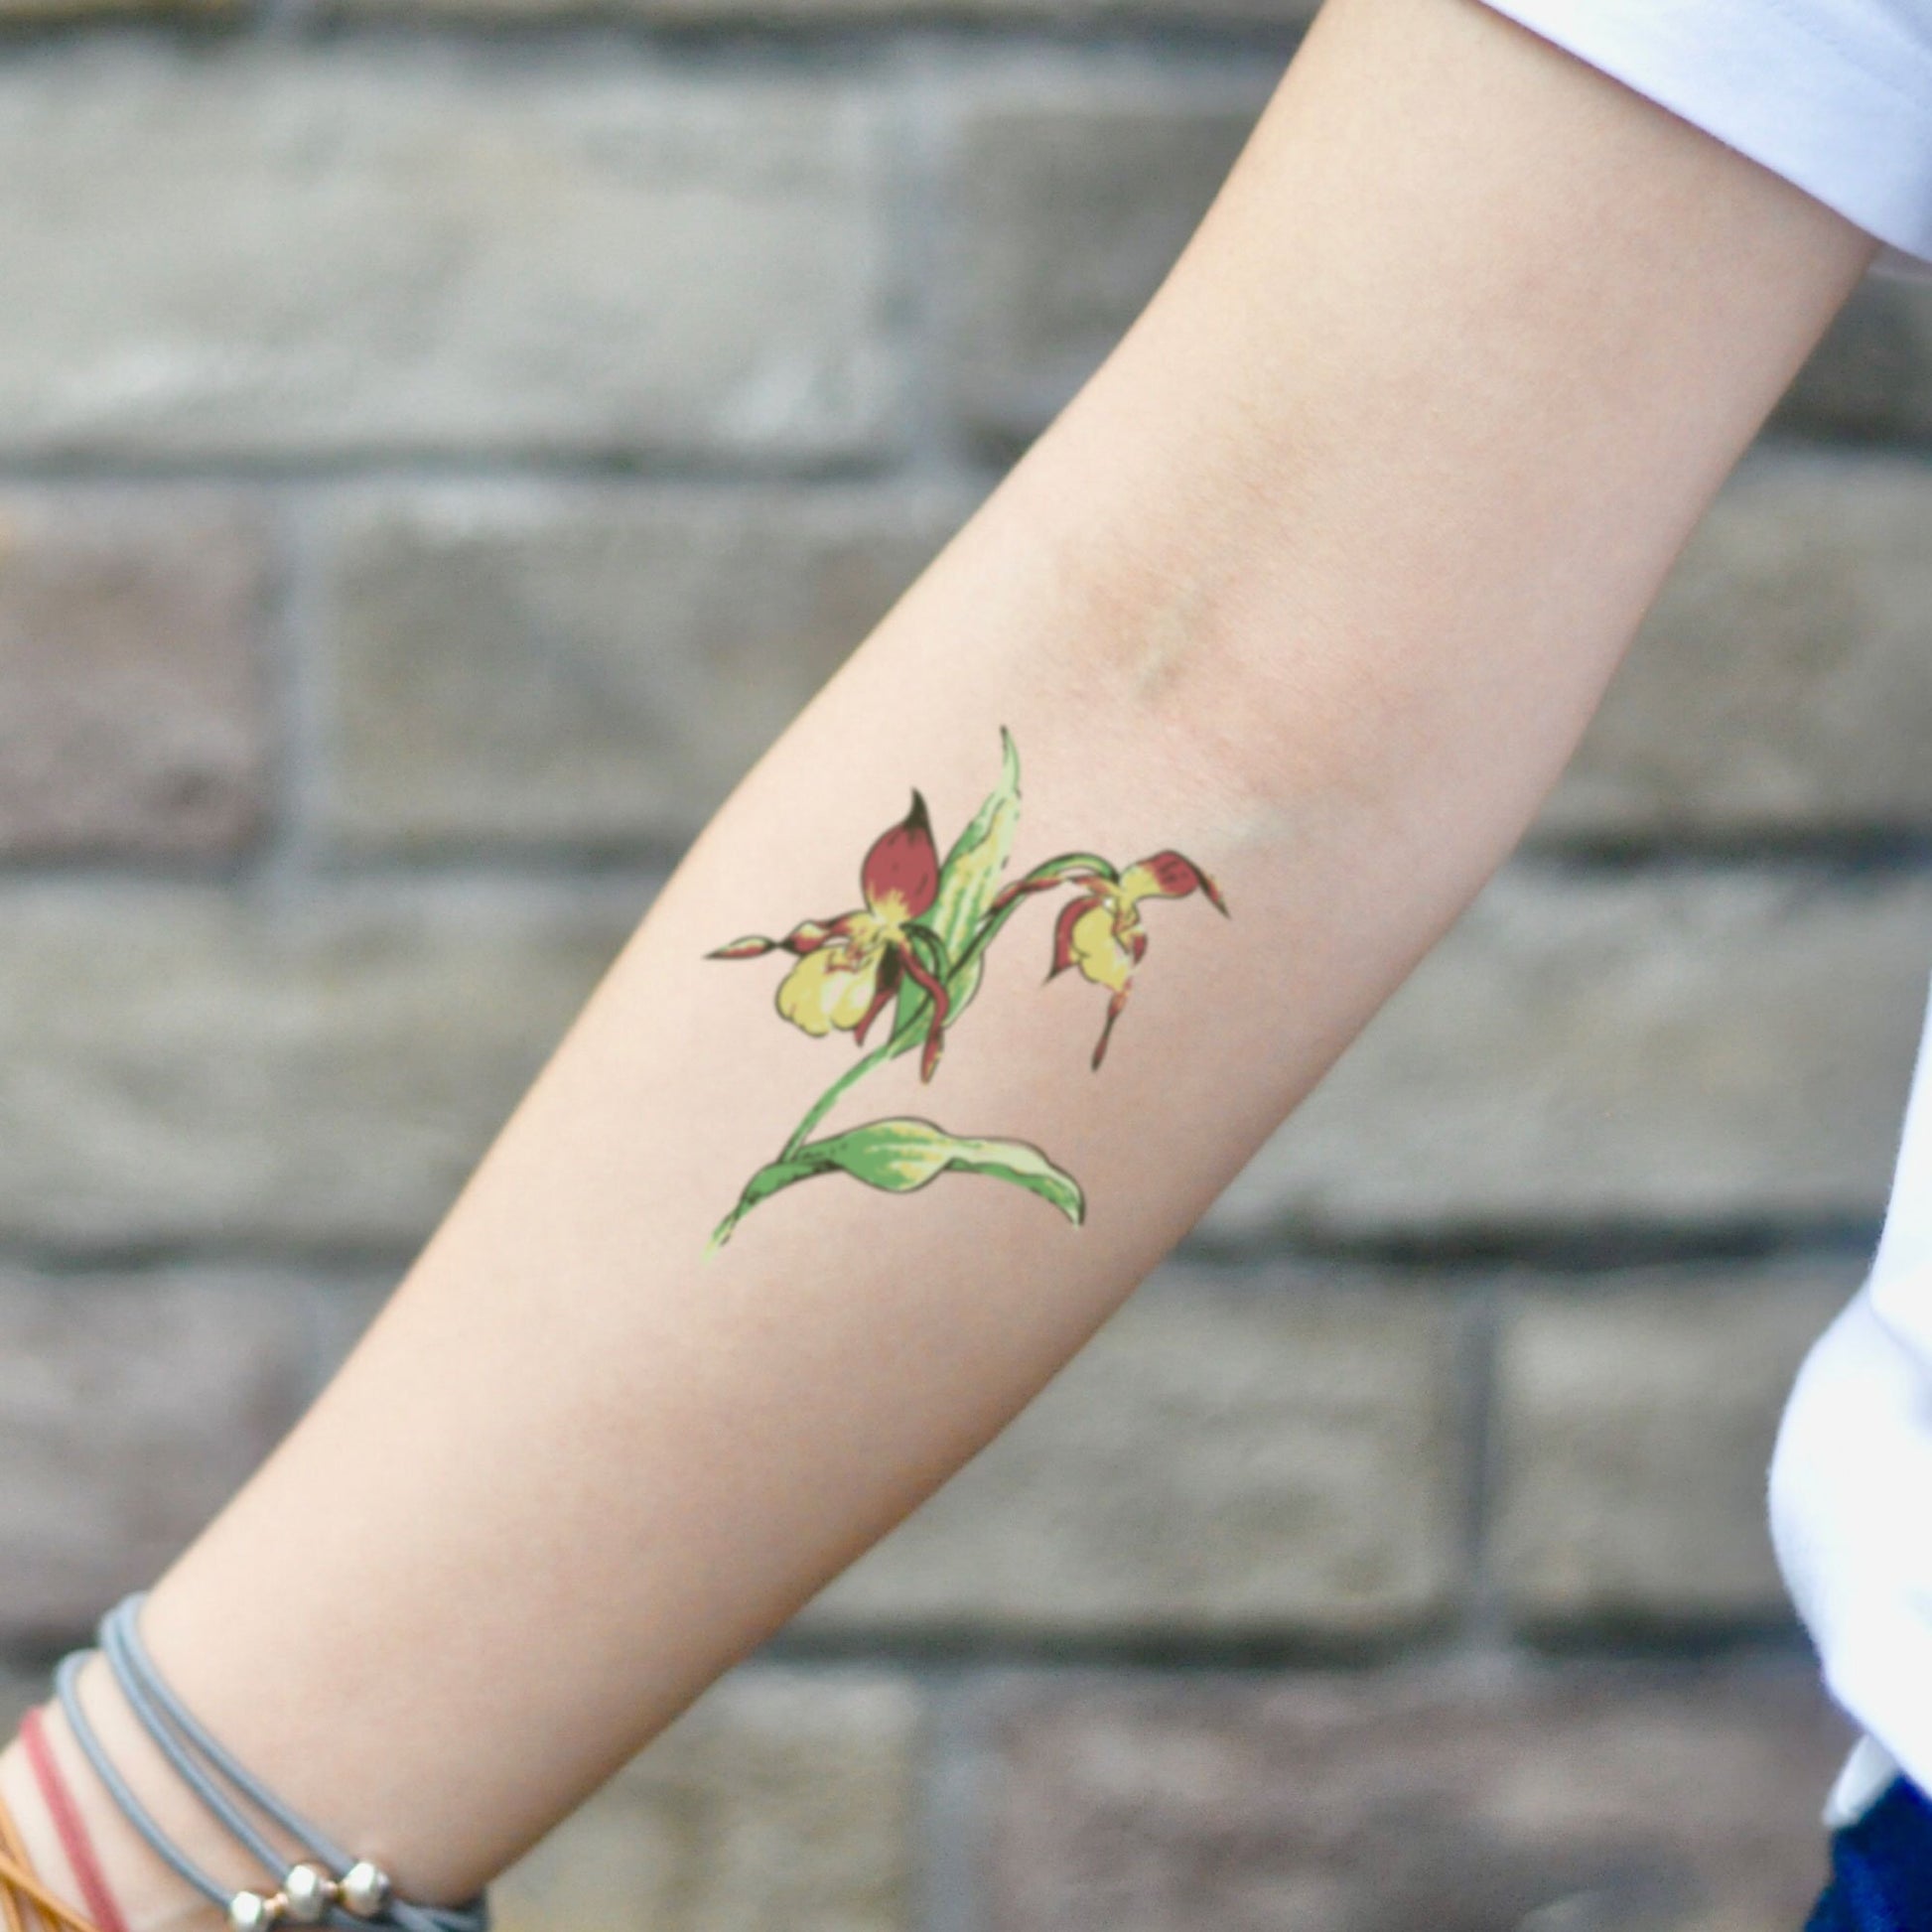 fake small showy lady slipper flower temporary tattoo sticker design idea on inner arm